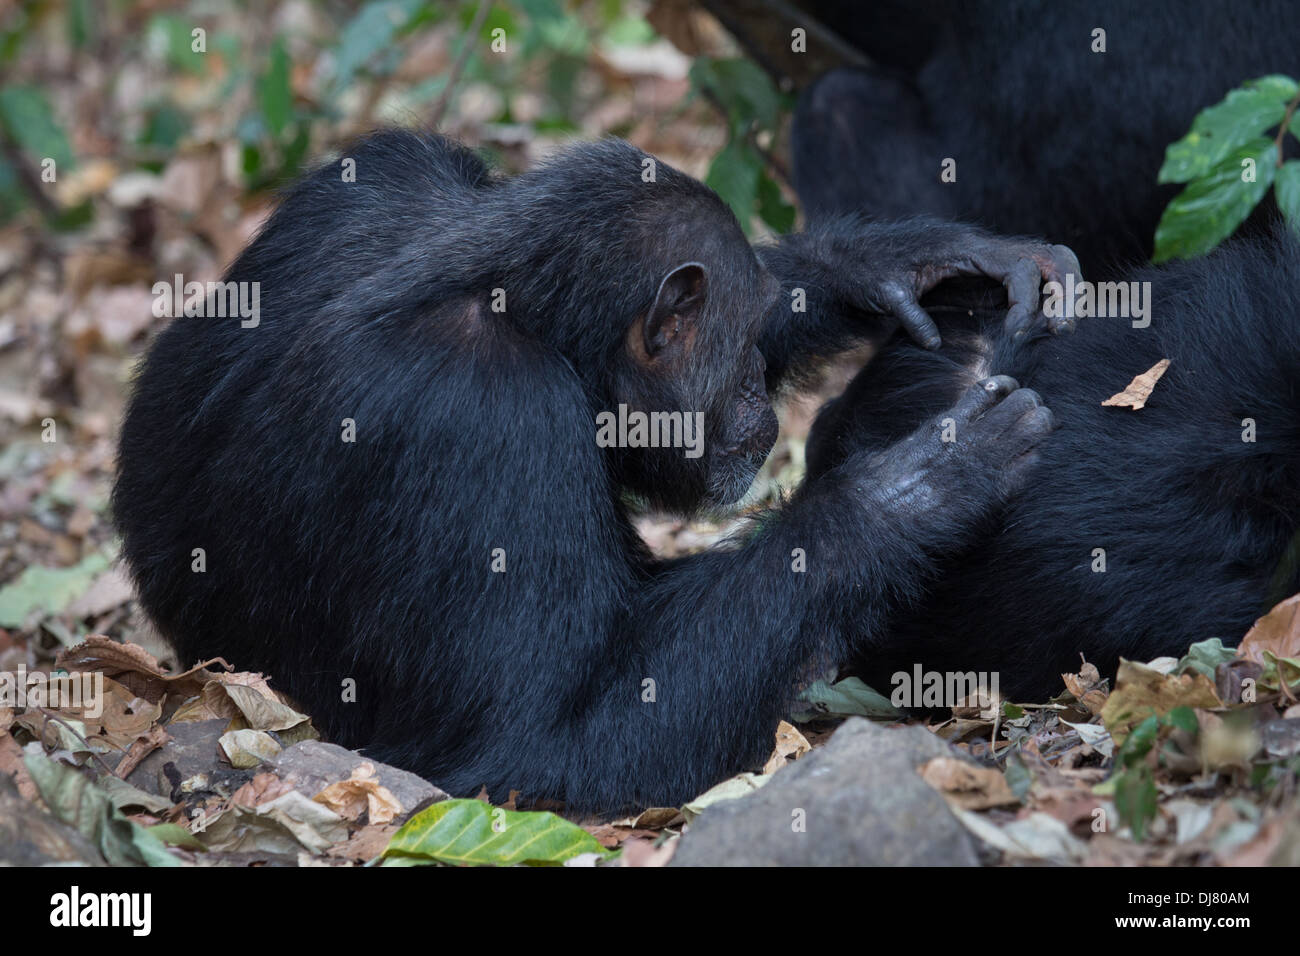 Eastern chimpanzee, Pan troglodytes schweinfurthii, during a grooming session Stock Photo